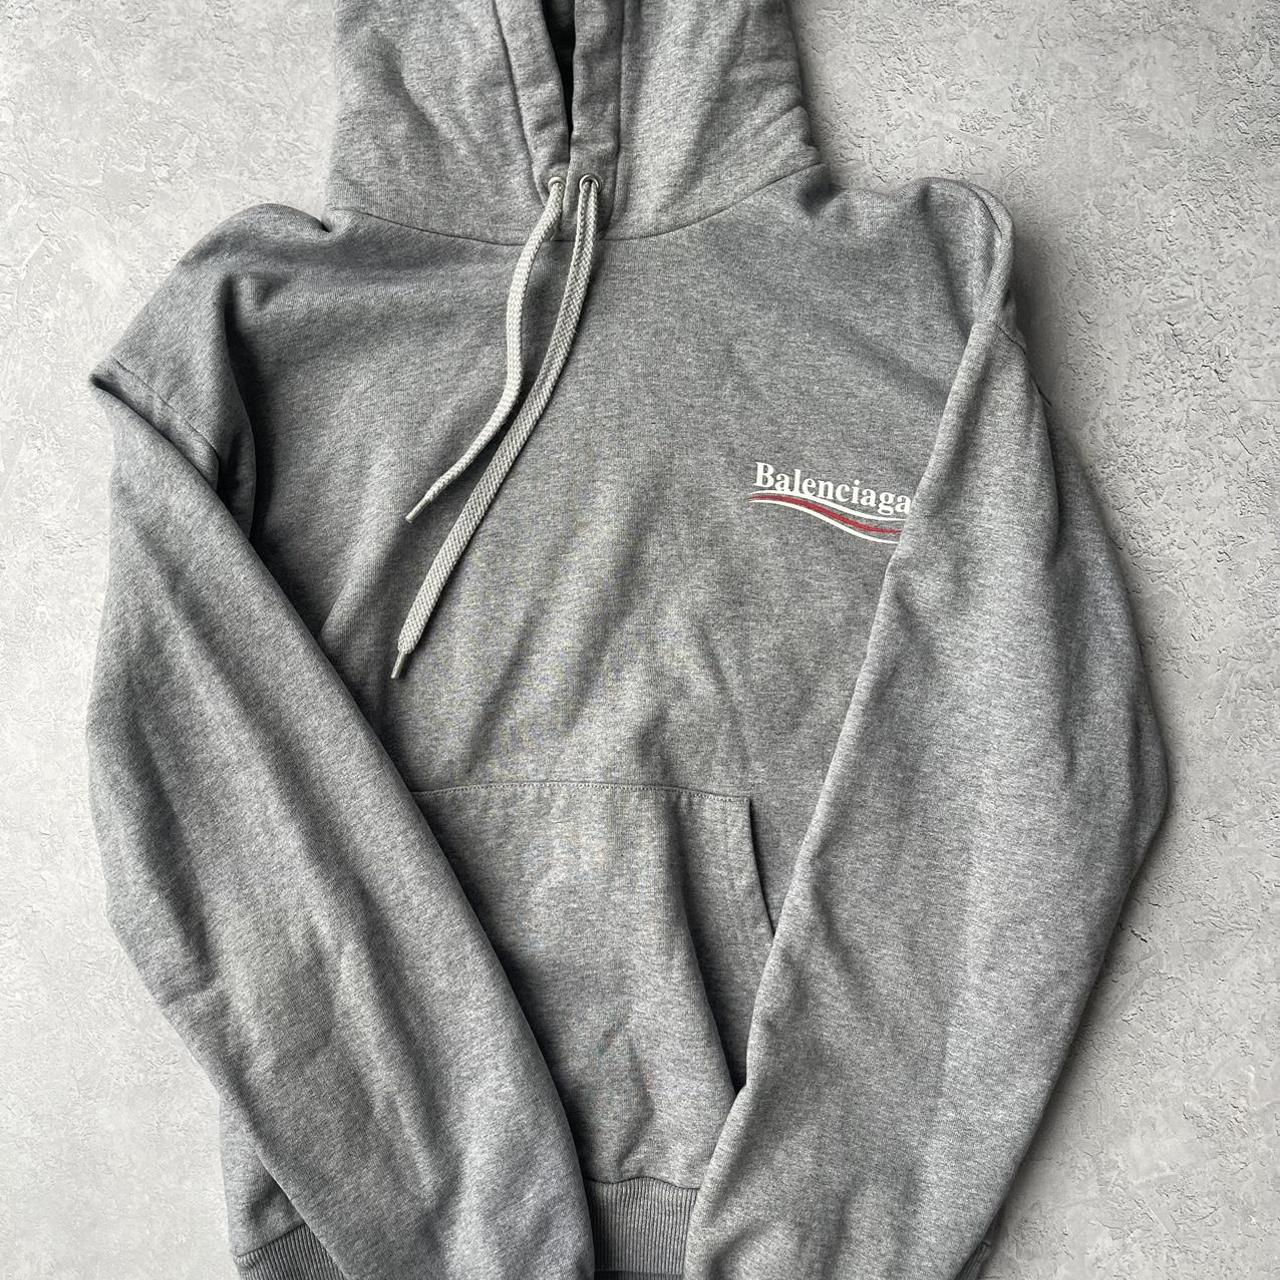 Balenciaga hoodie - Depop